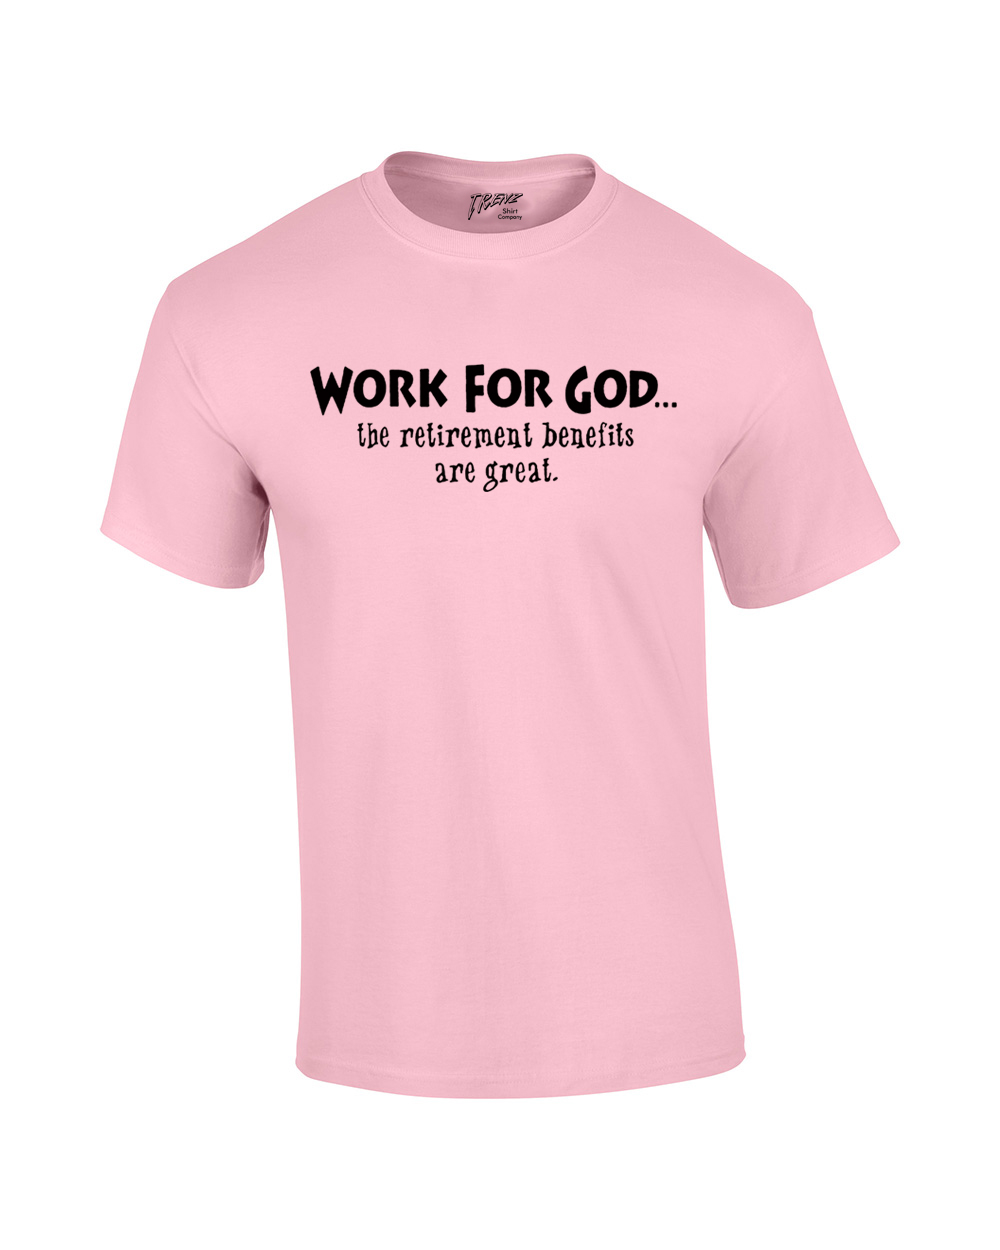 Christian Short Sleeve T-shirt Work for God The Benefits are Great Black Print-lightpink-Medium - image 1 of 4